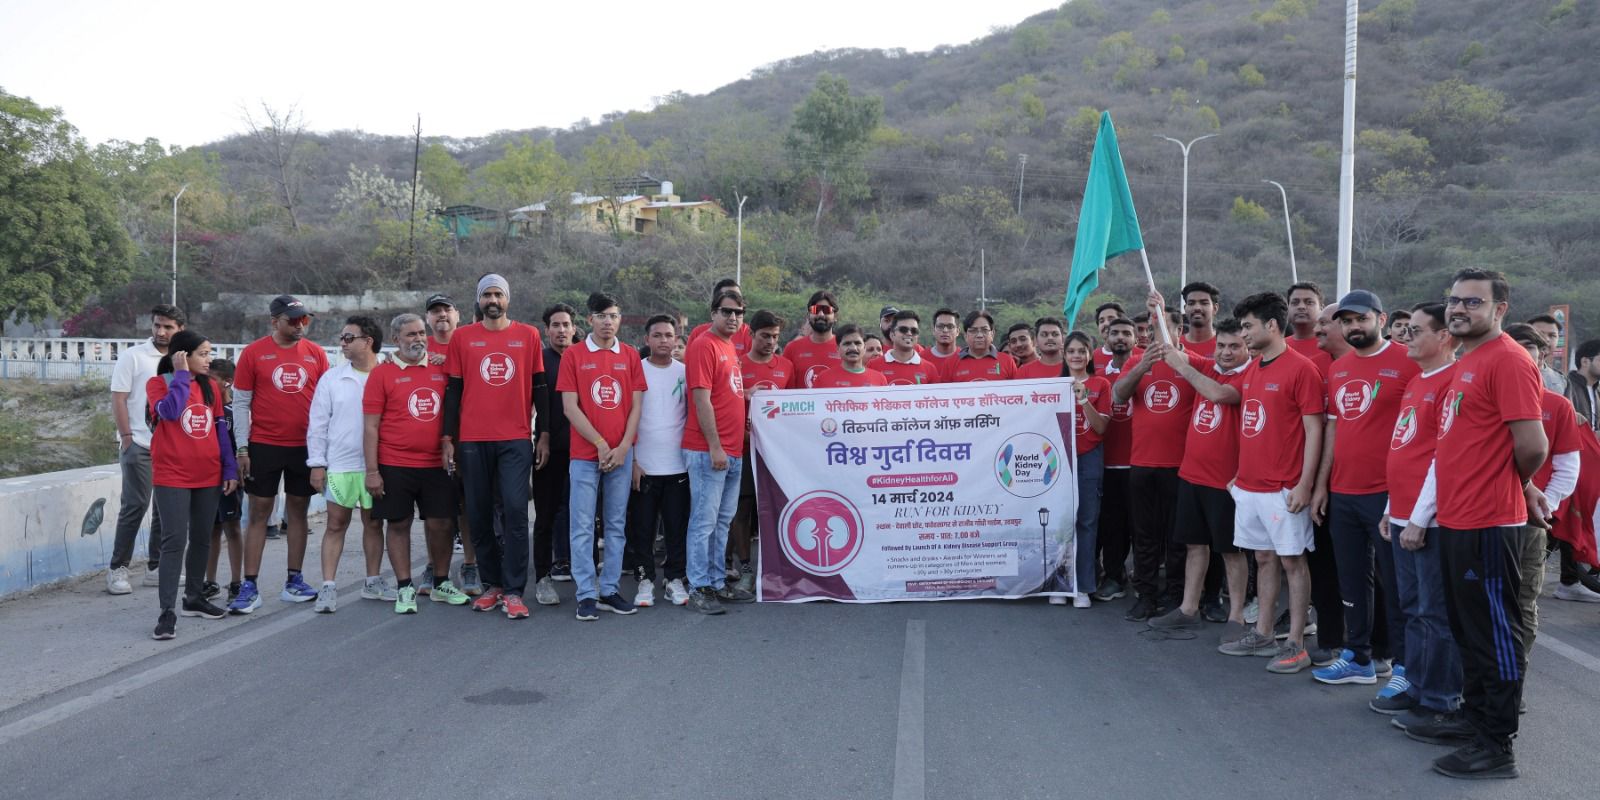 PMCH :Run for Kidney' organized on World Kidney Day